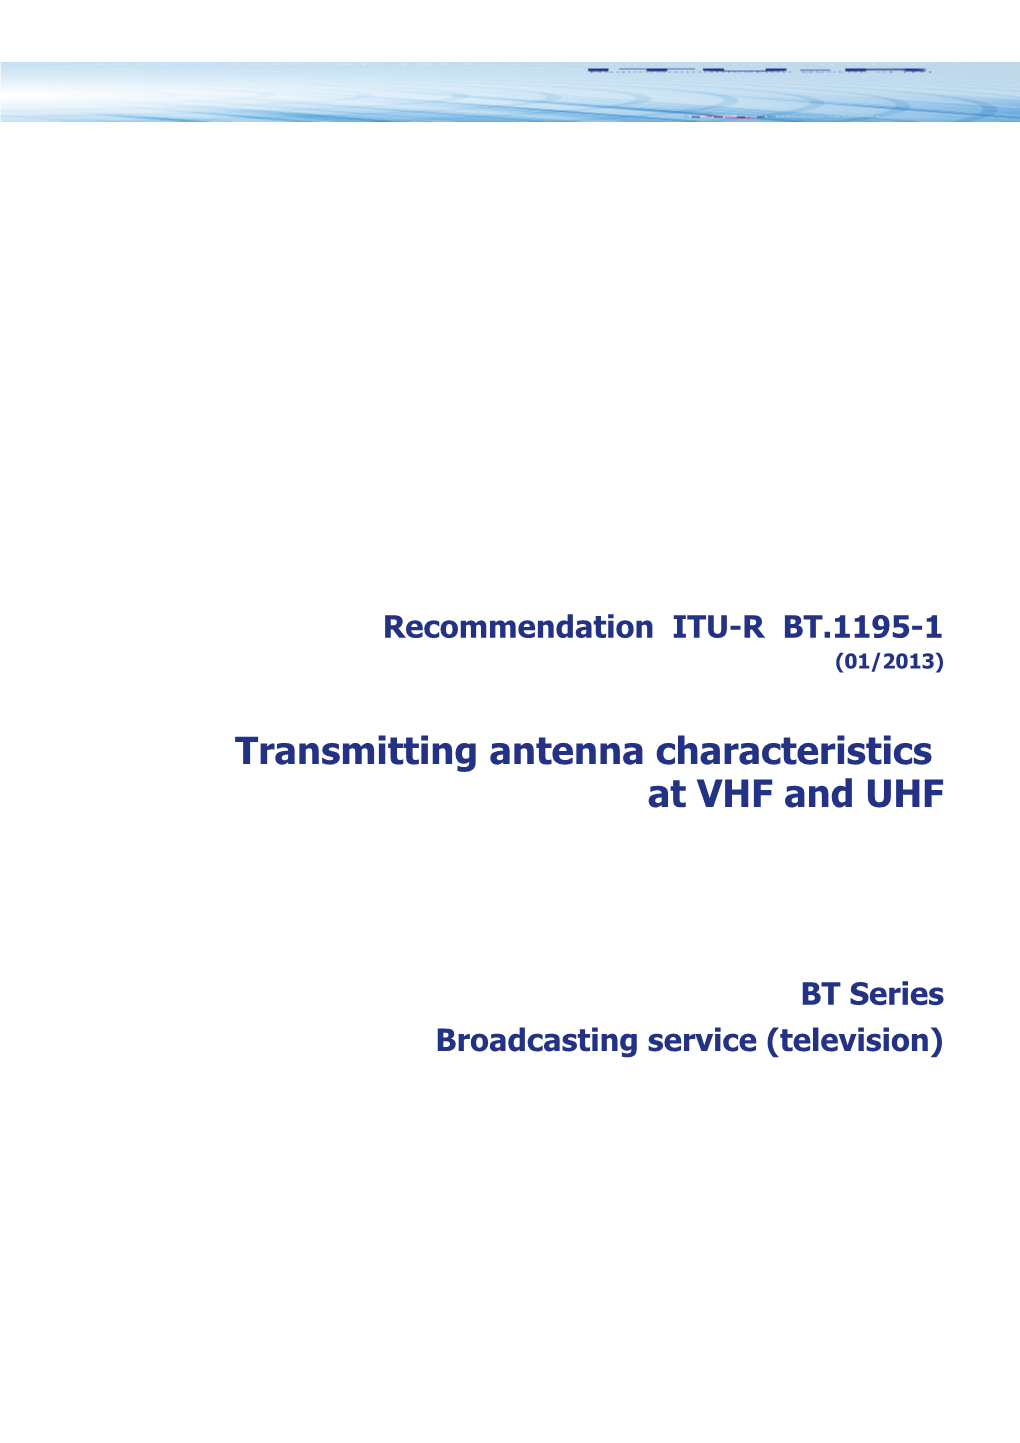 RECOMMENDATION ITU-R BS.1195-1 - Transmitting Antenna Characteristics at VHF and UHF